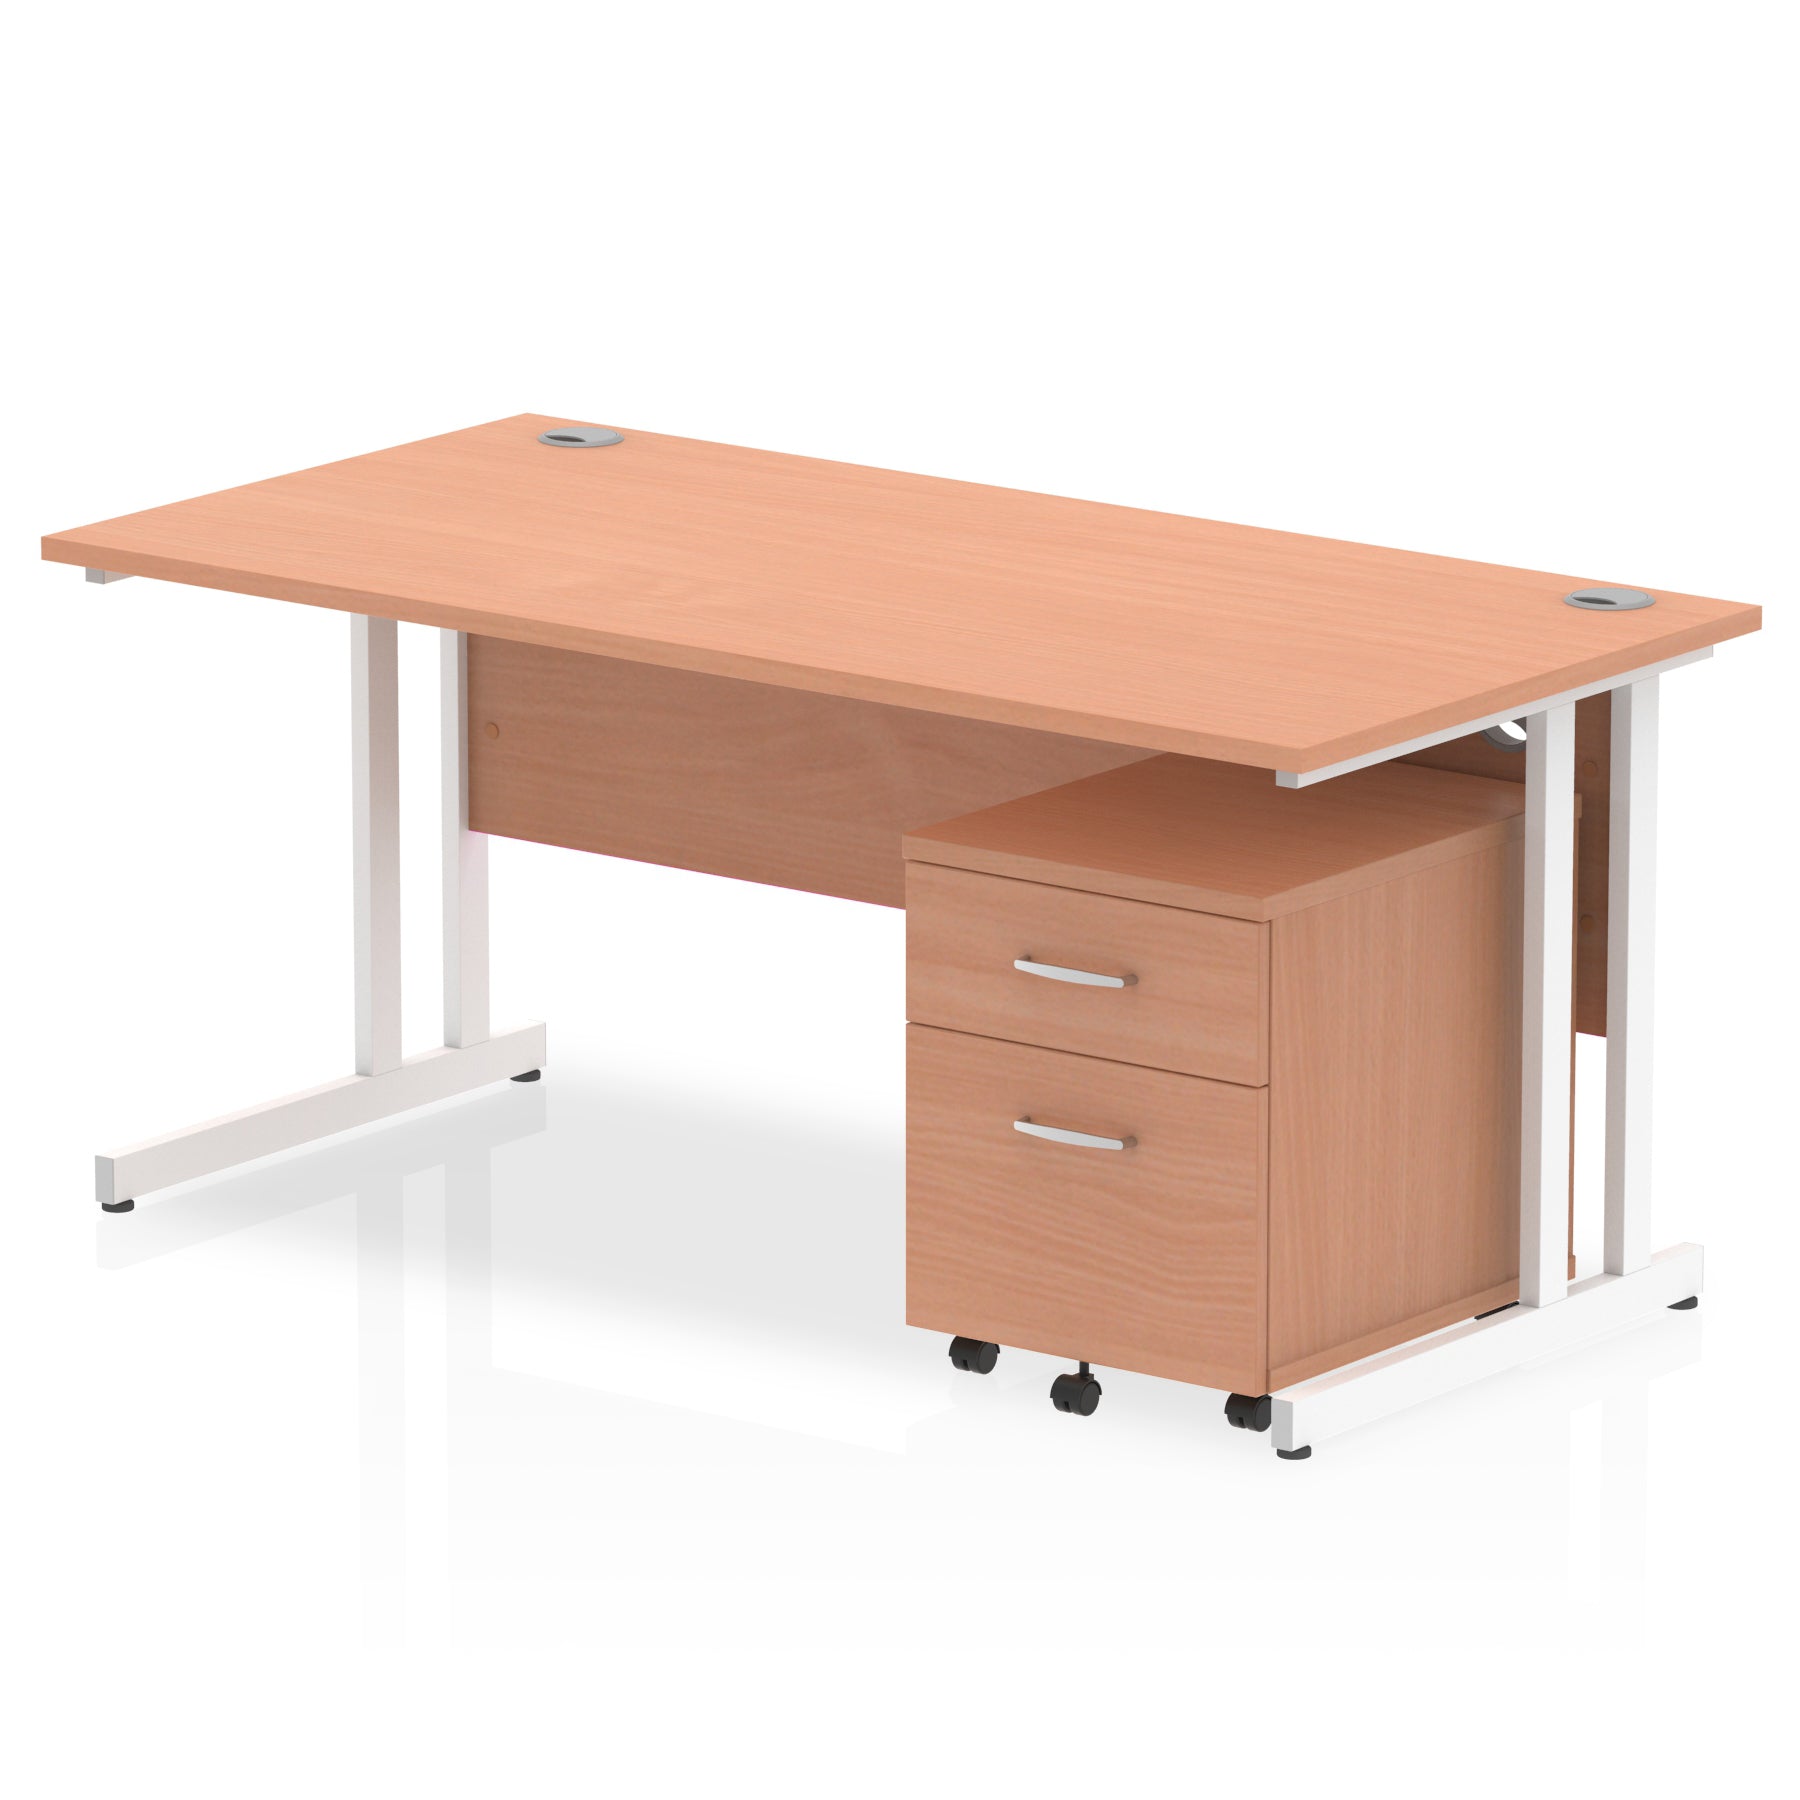 Impulse 1600mm Cantilever Straight Desk With Mobile Pedestal